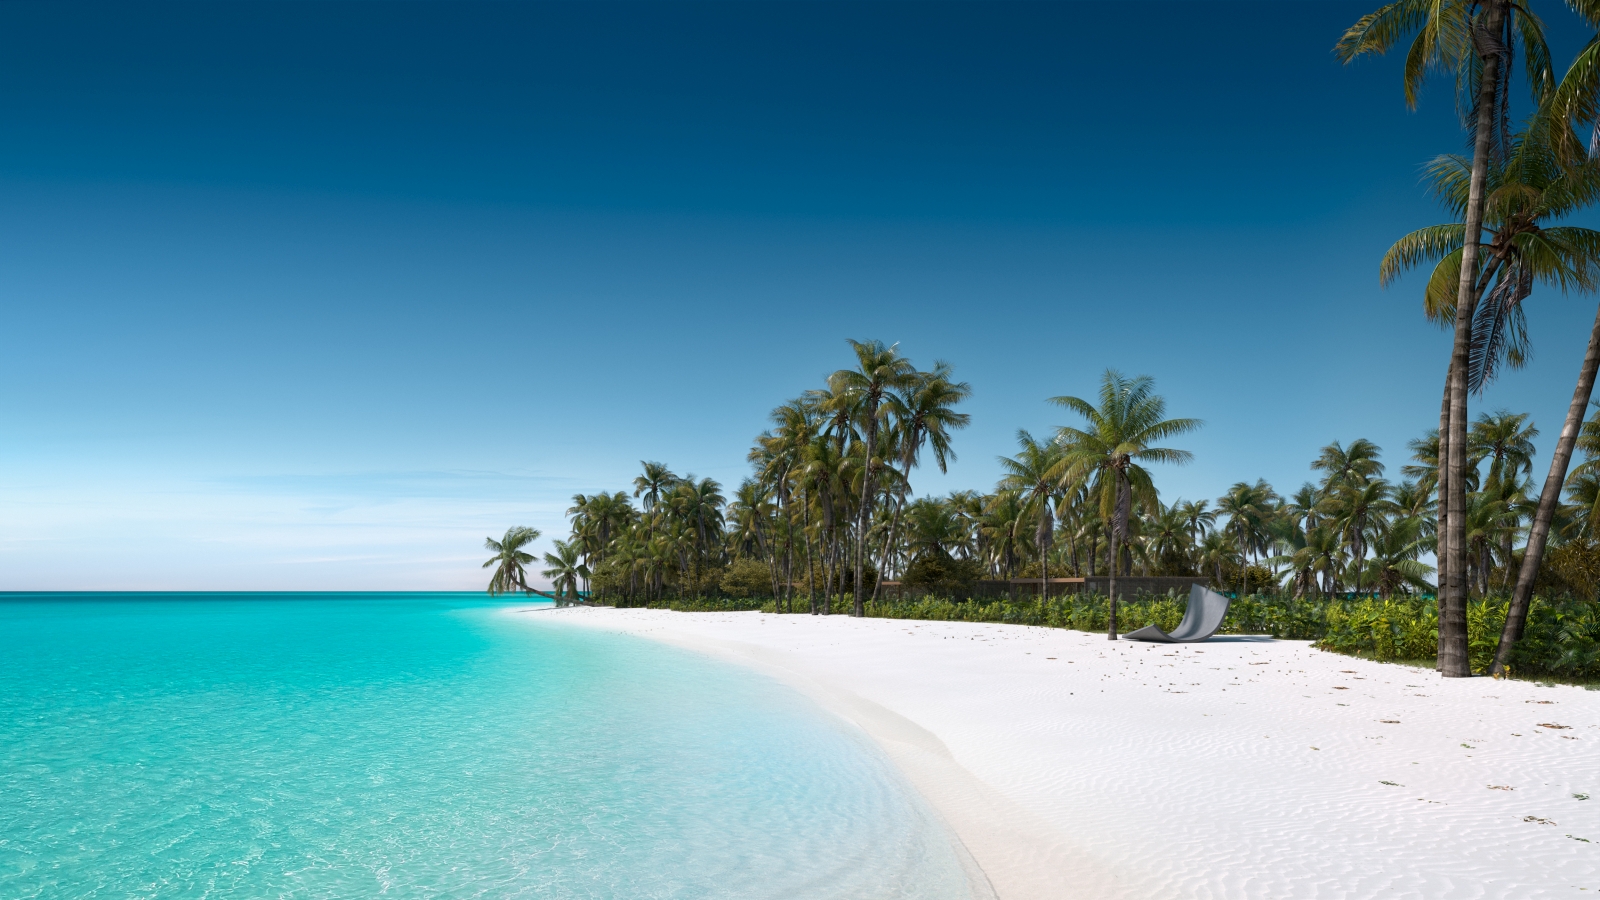 Art installation on the white sand beach of luxury resort Patina Maldives